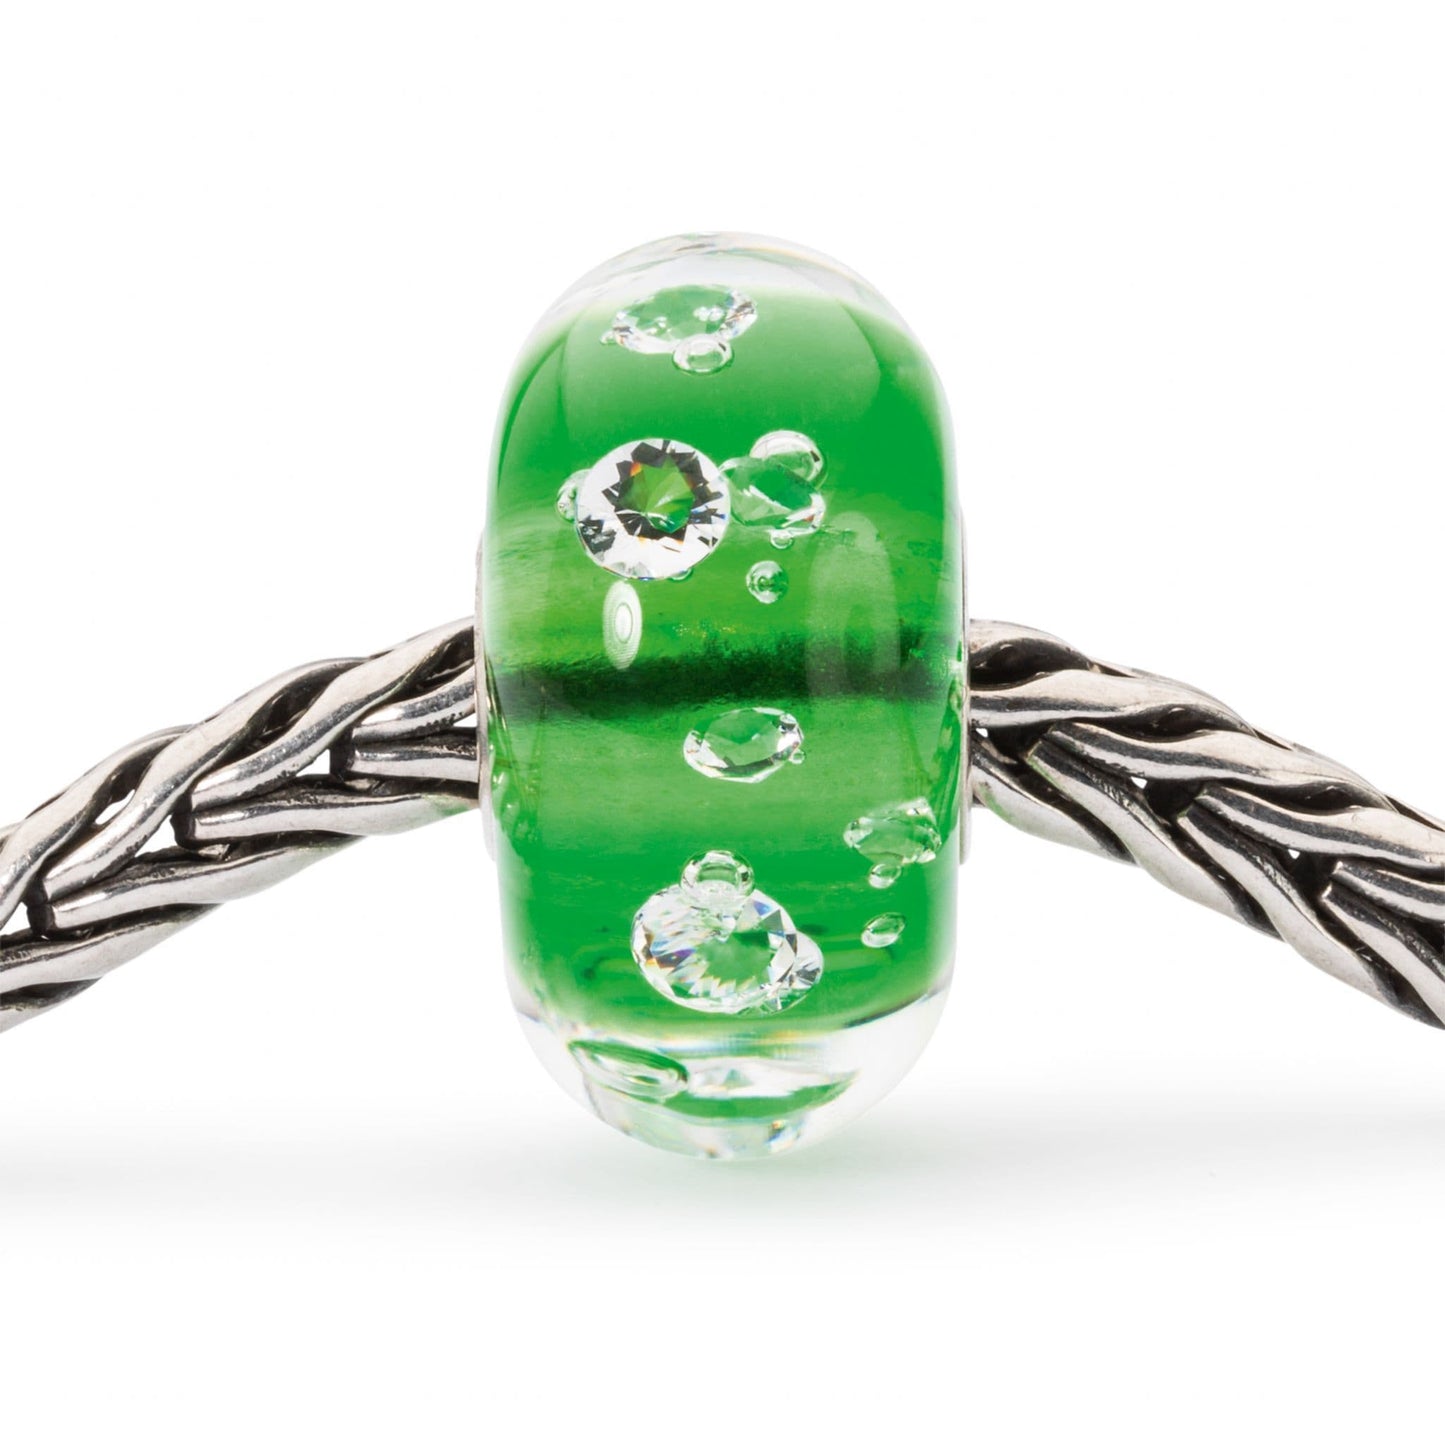 Trollbeads The Diamond Bead, Emerald Green Glass Bead TGLBE-00075